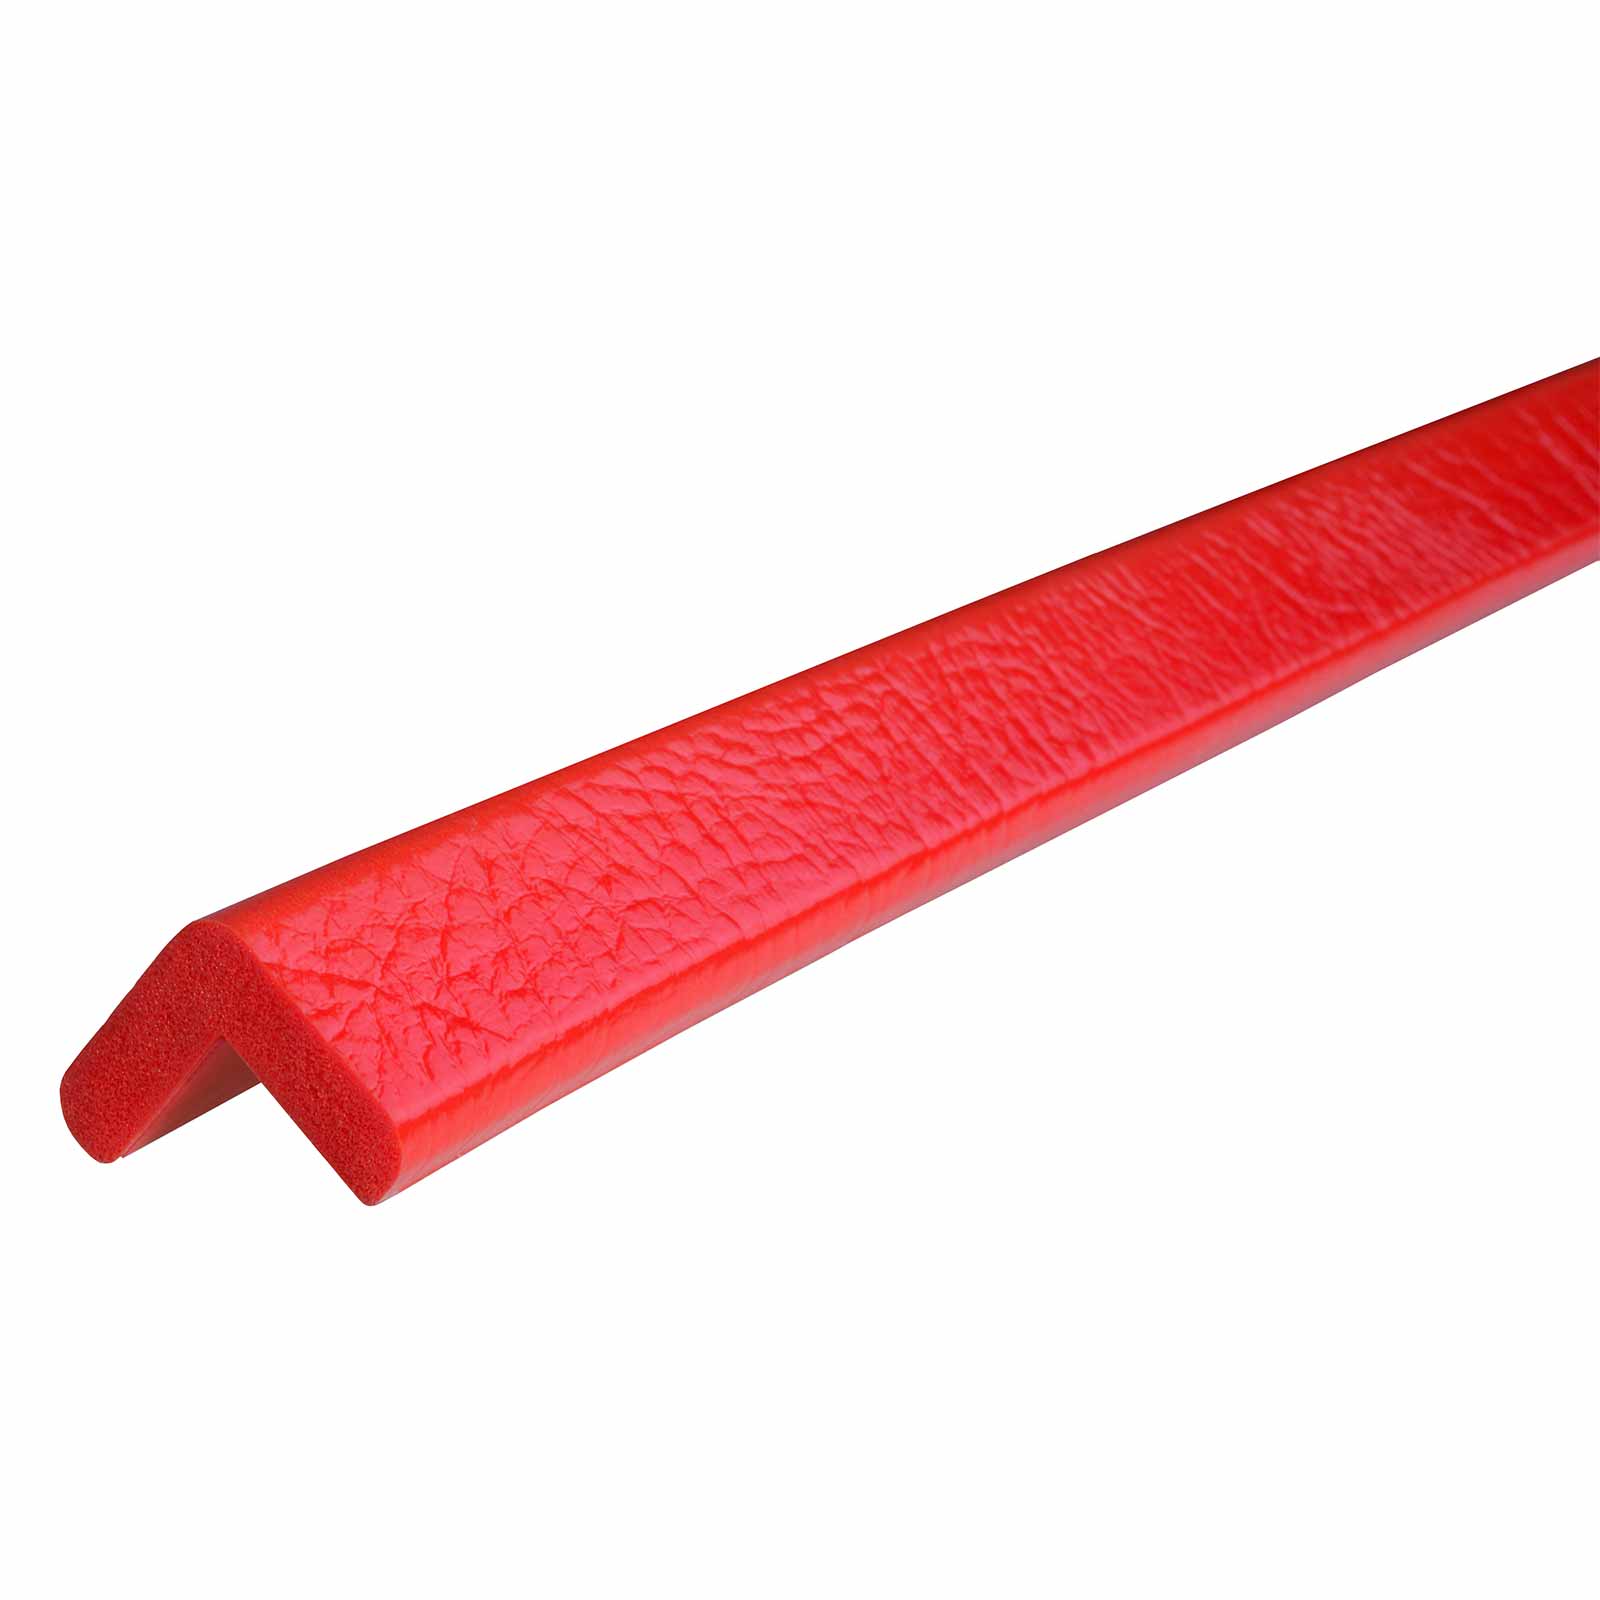 Knuffi Eckschutzprofil TypE selbstklebend 1m Kantenschutz Eckschutz Schutzprofil Farbe:rot von Knuffi